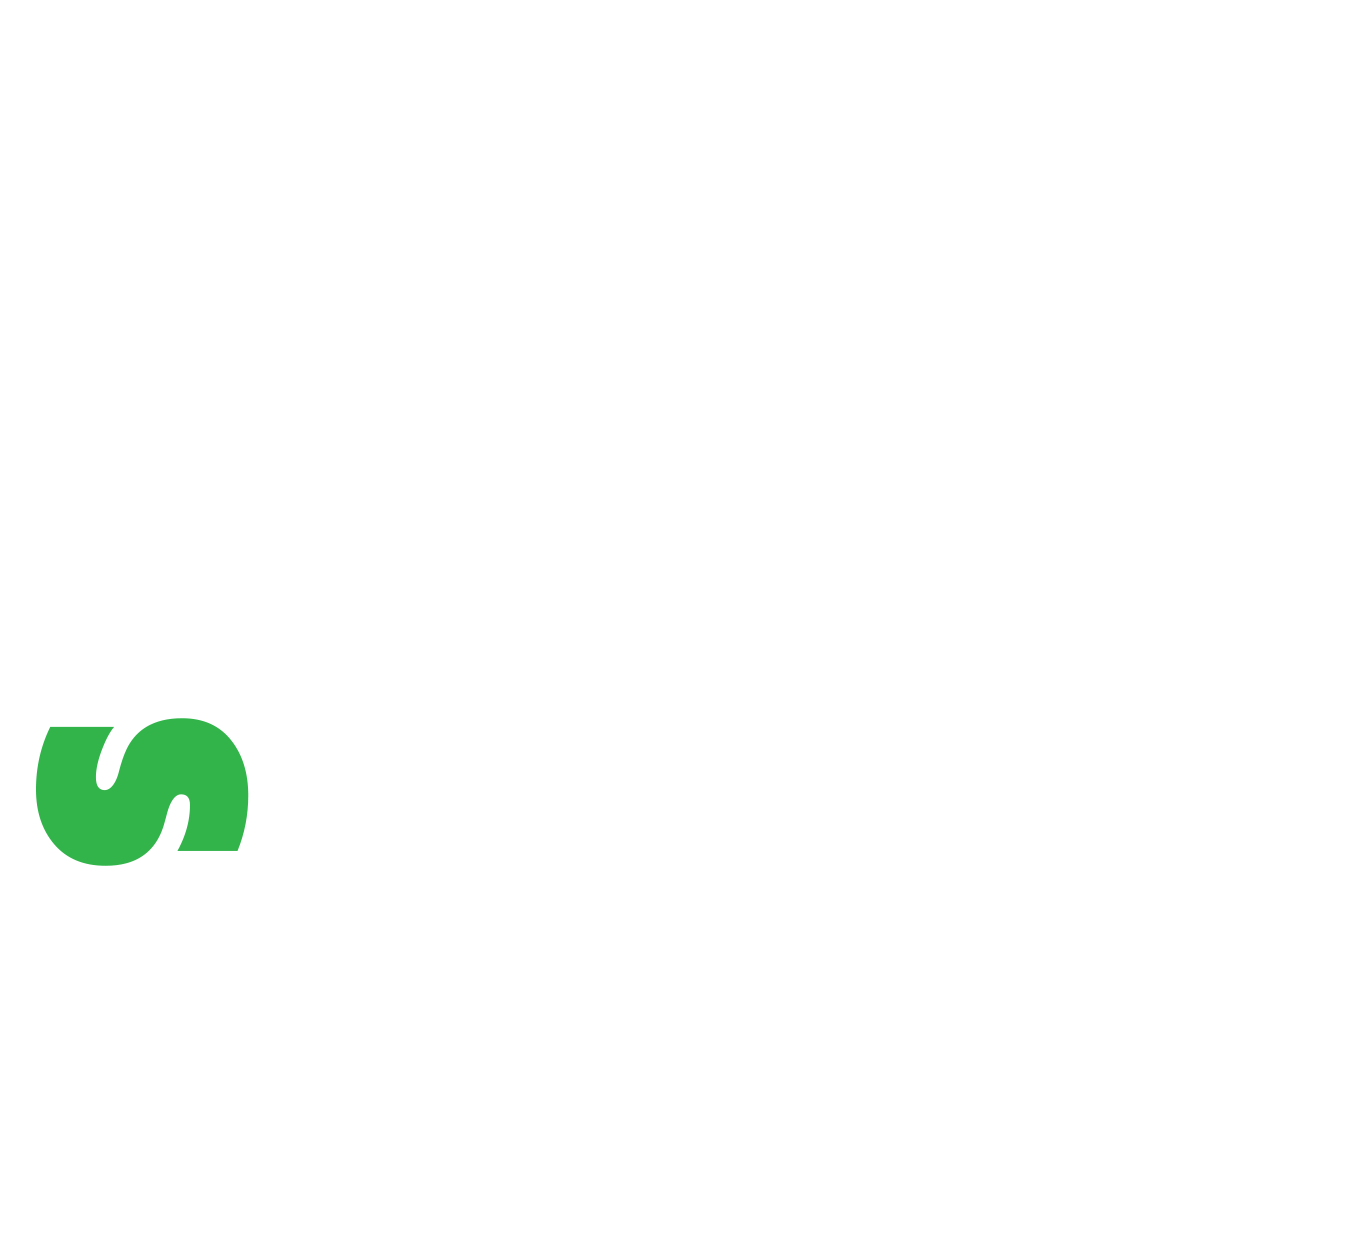 topcon steelwrist logos